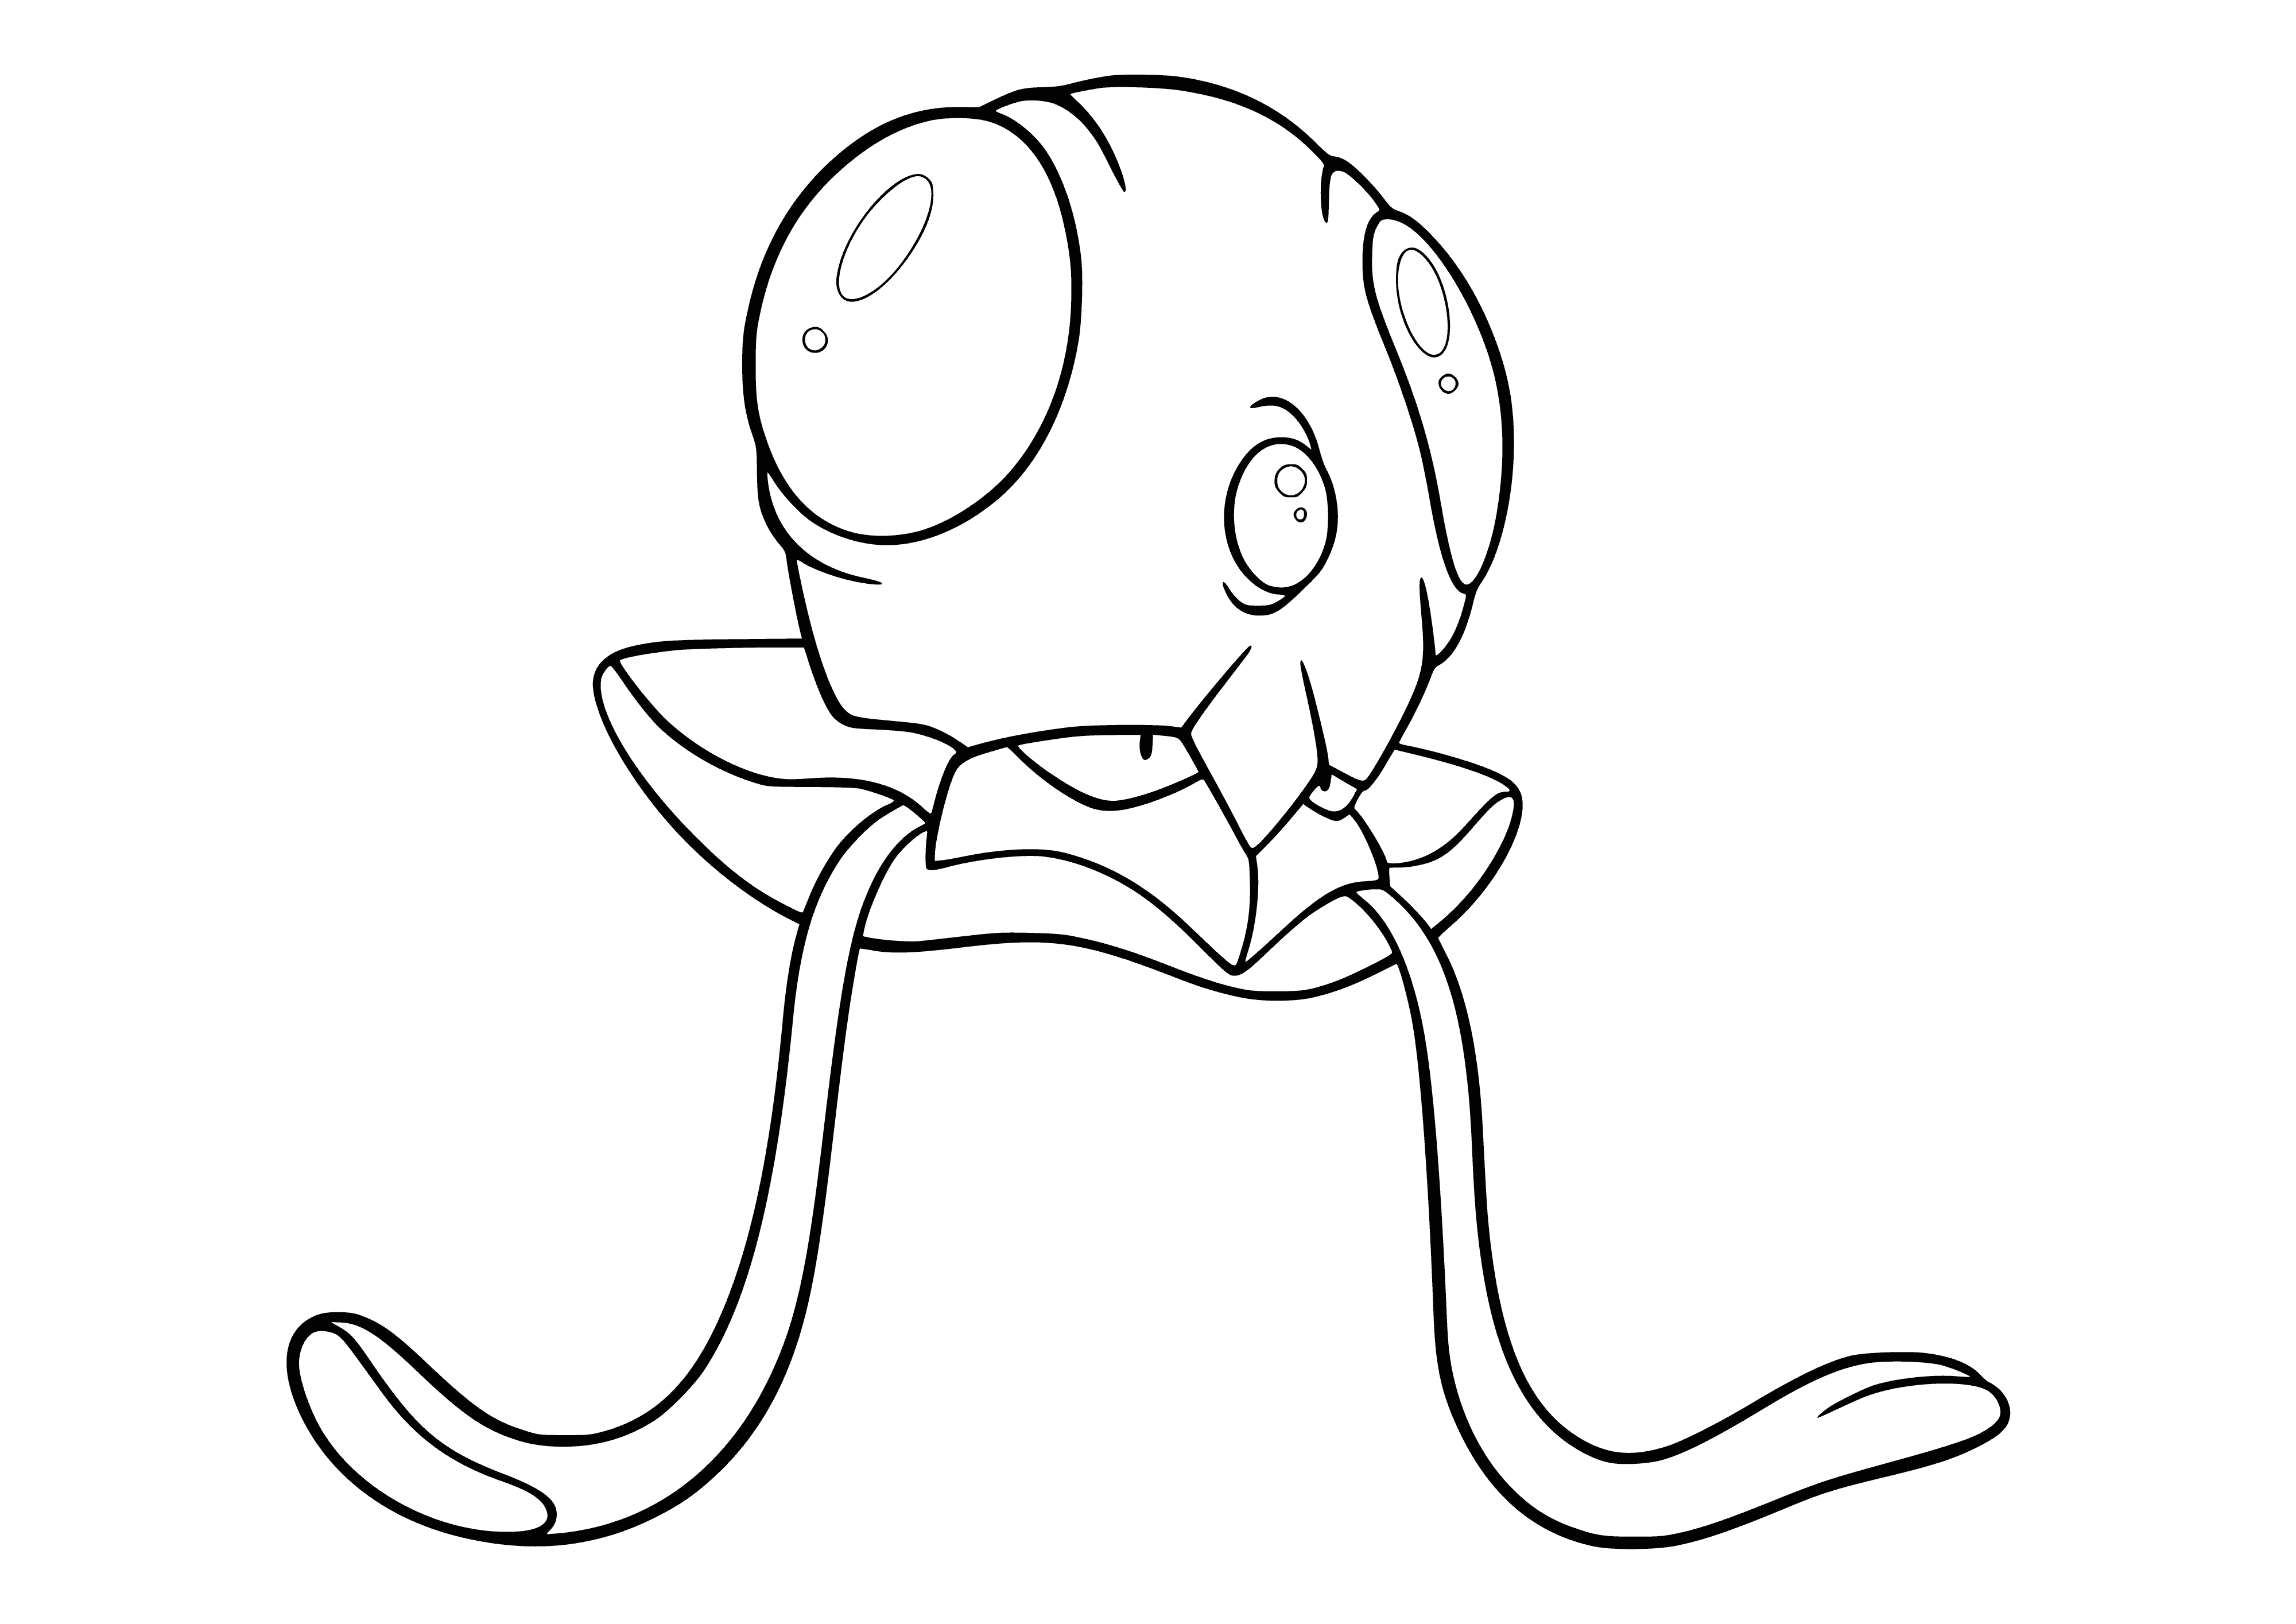 coloring page: Gelatinous Pokémon w/8 tentacles & red & white diamond shape on back. Yellow eyes w/black pupils.